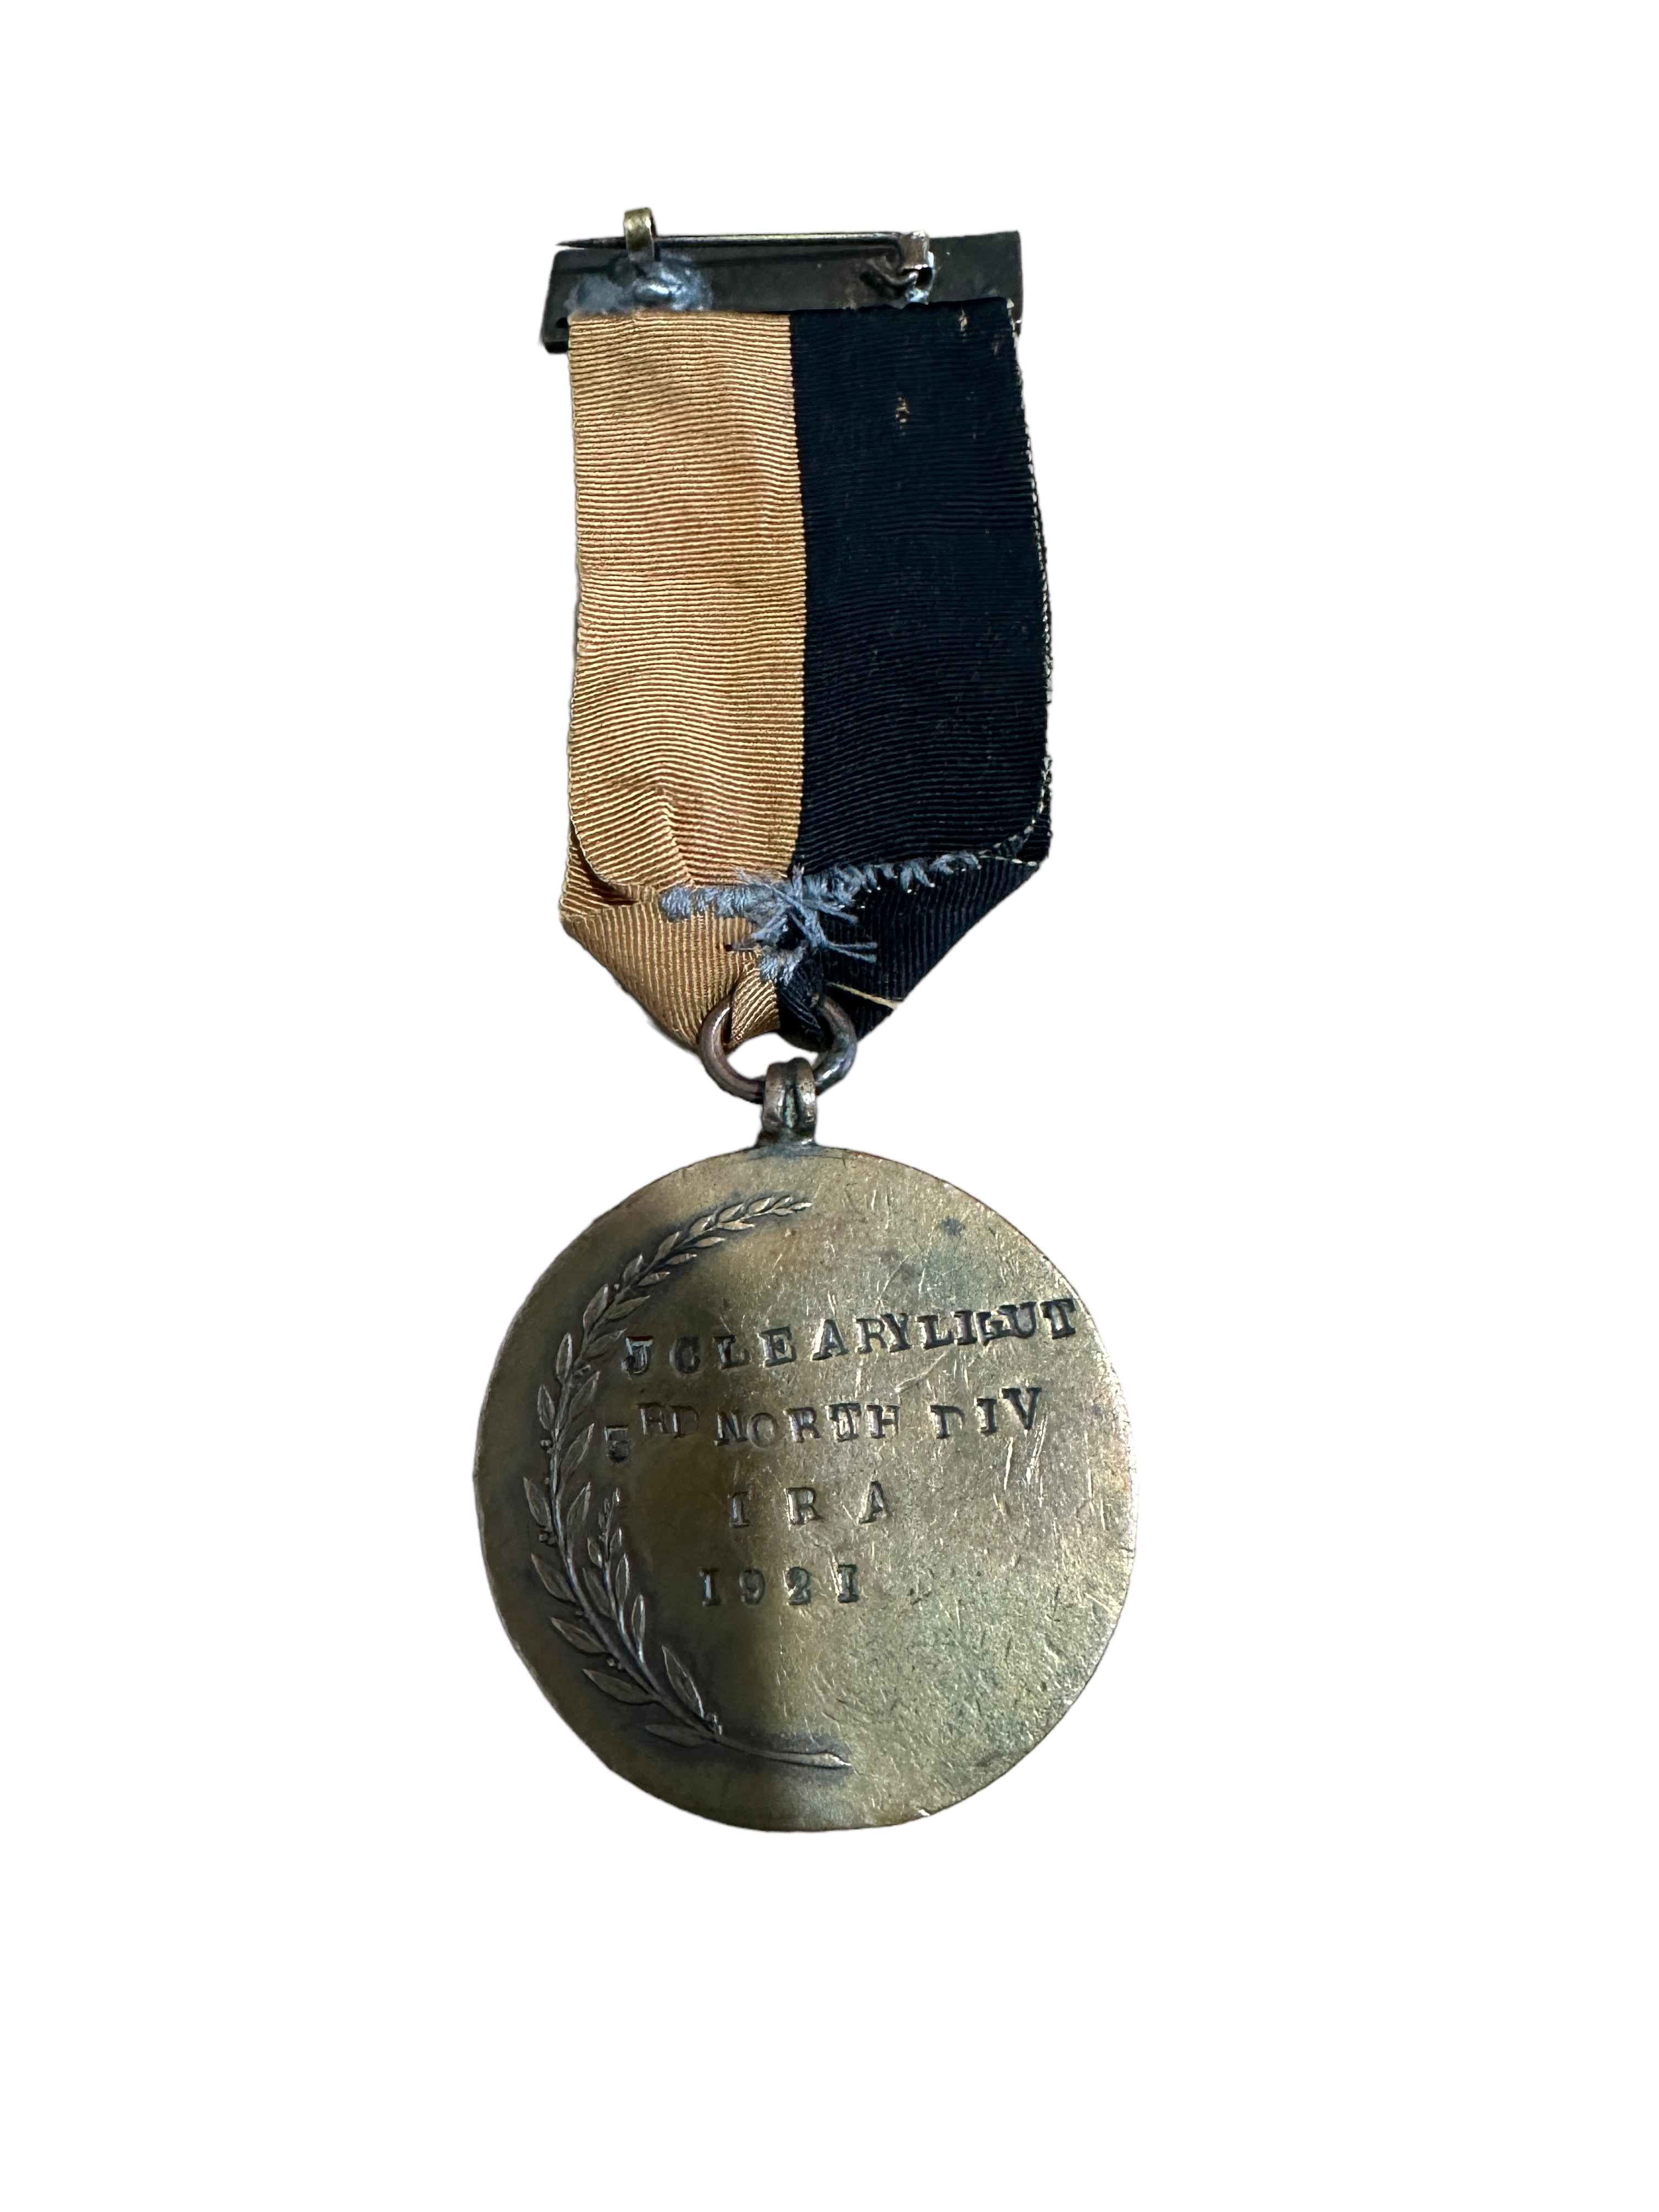 Irish War of Independence Service Medal - 41mm diameter. - Image 4 of 5